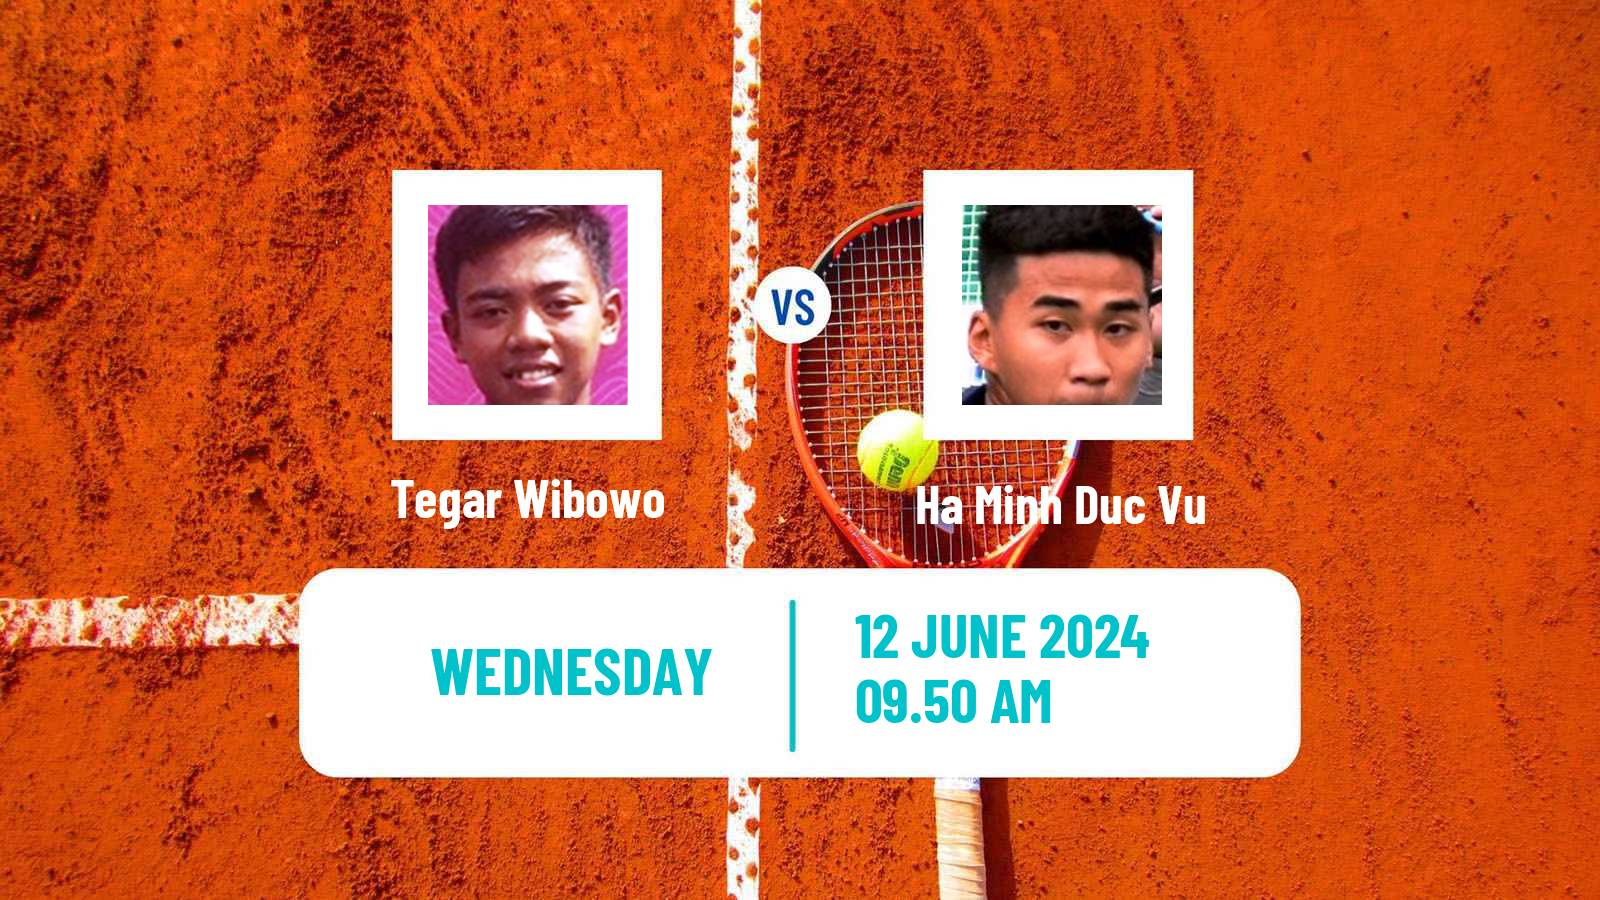 Tennis Davis Cup Group III Tegar Wibowo - Ha Minh Duc Vu